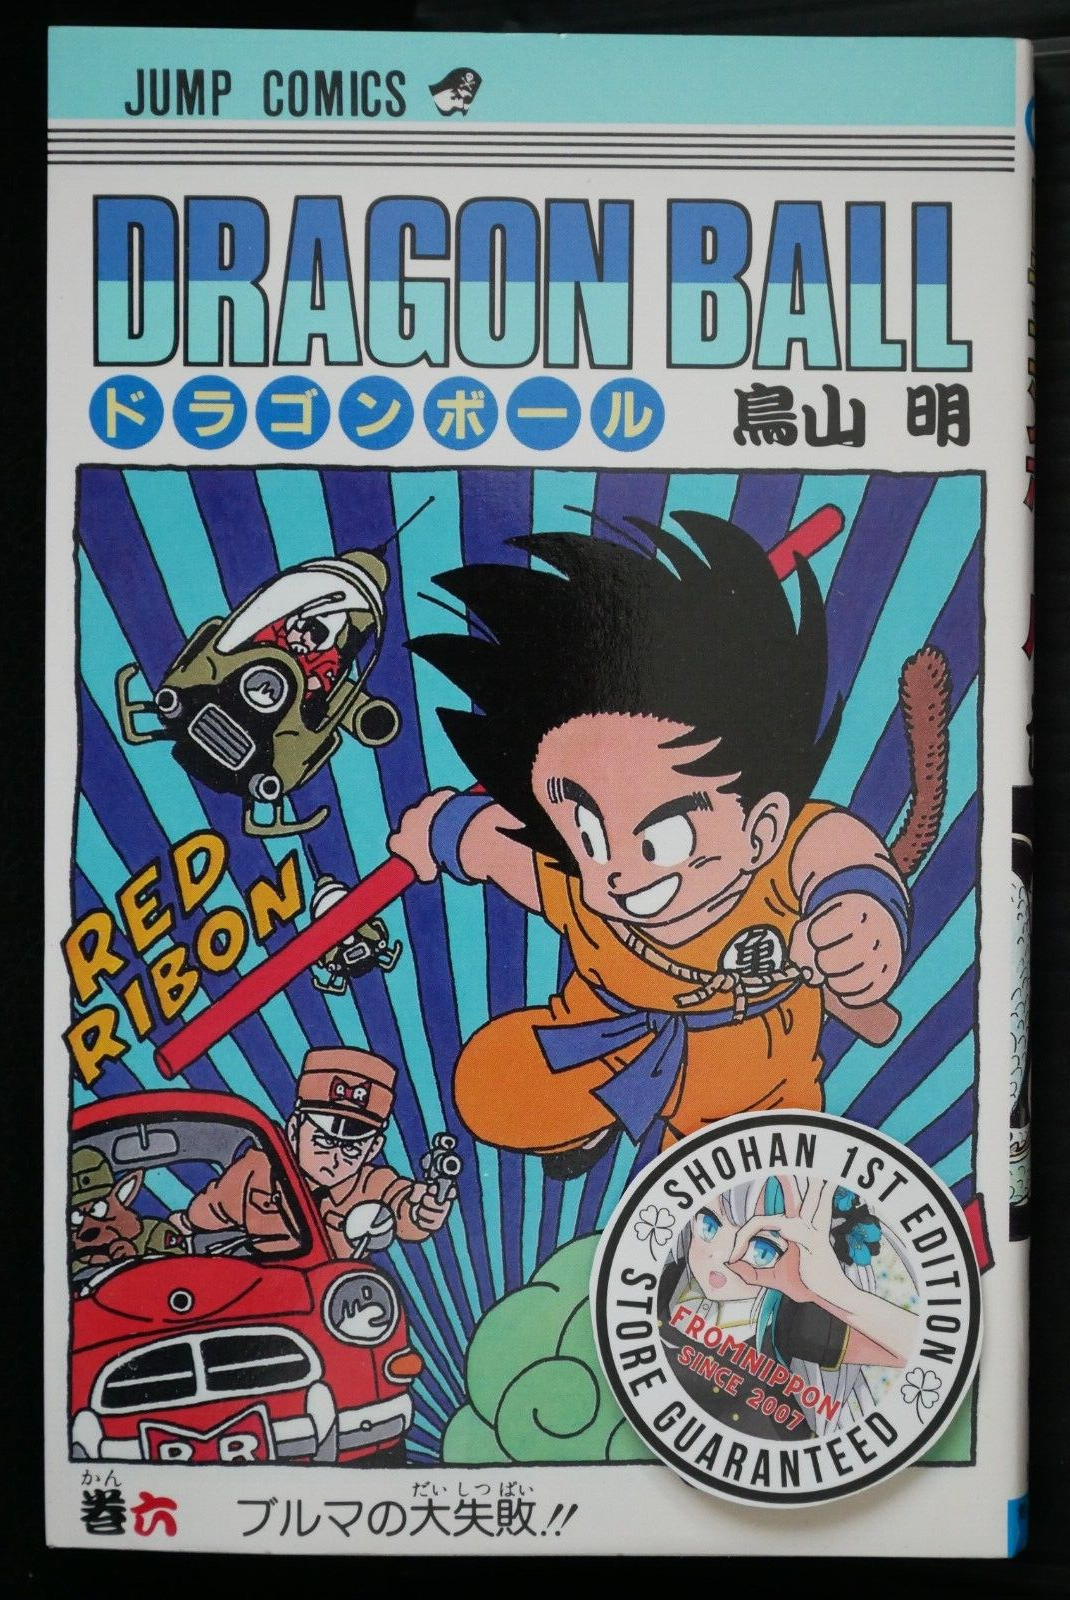 SHOHAN (1st Edition): Dragon Ball vol.6 Manga by Akira Toriyama (6-1) from JAPAN